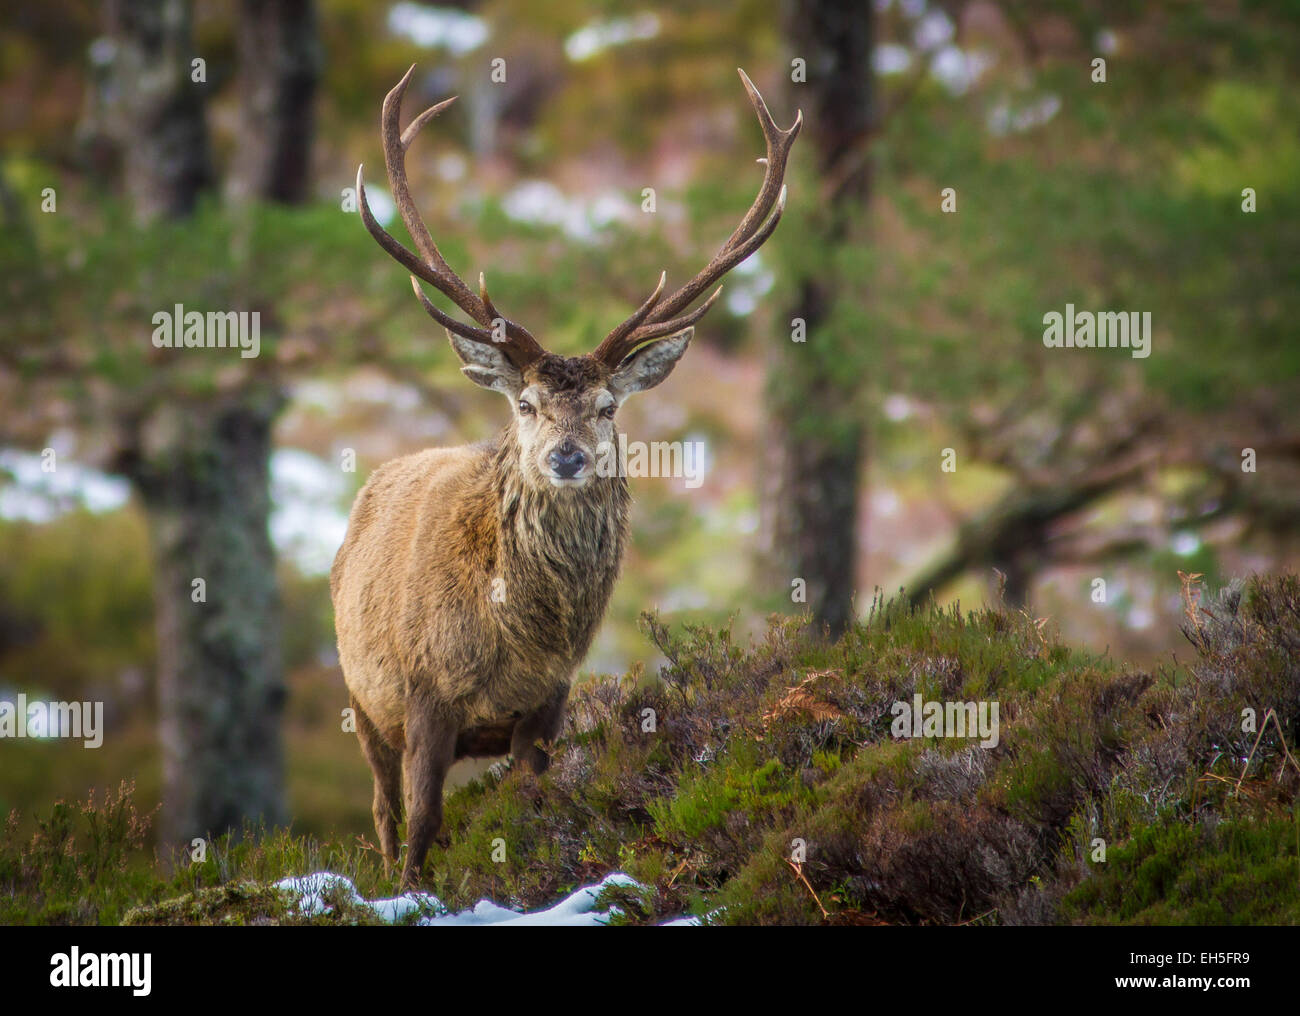 Wild ciervo ciervo en un bosque, Glen cannich, Escocia Foto de stock